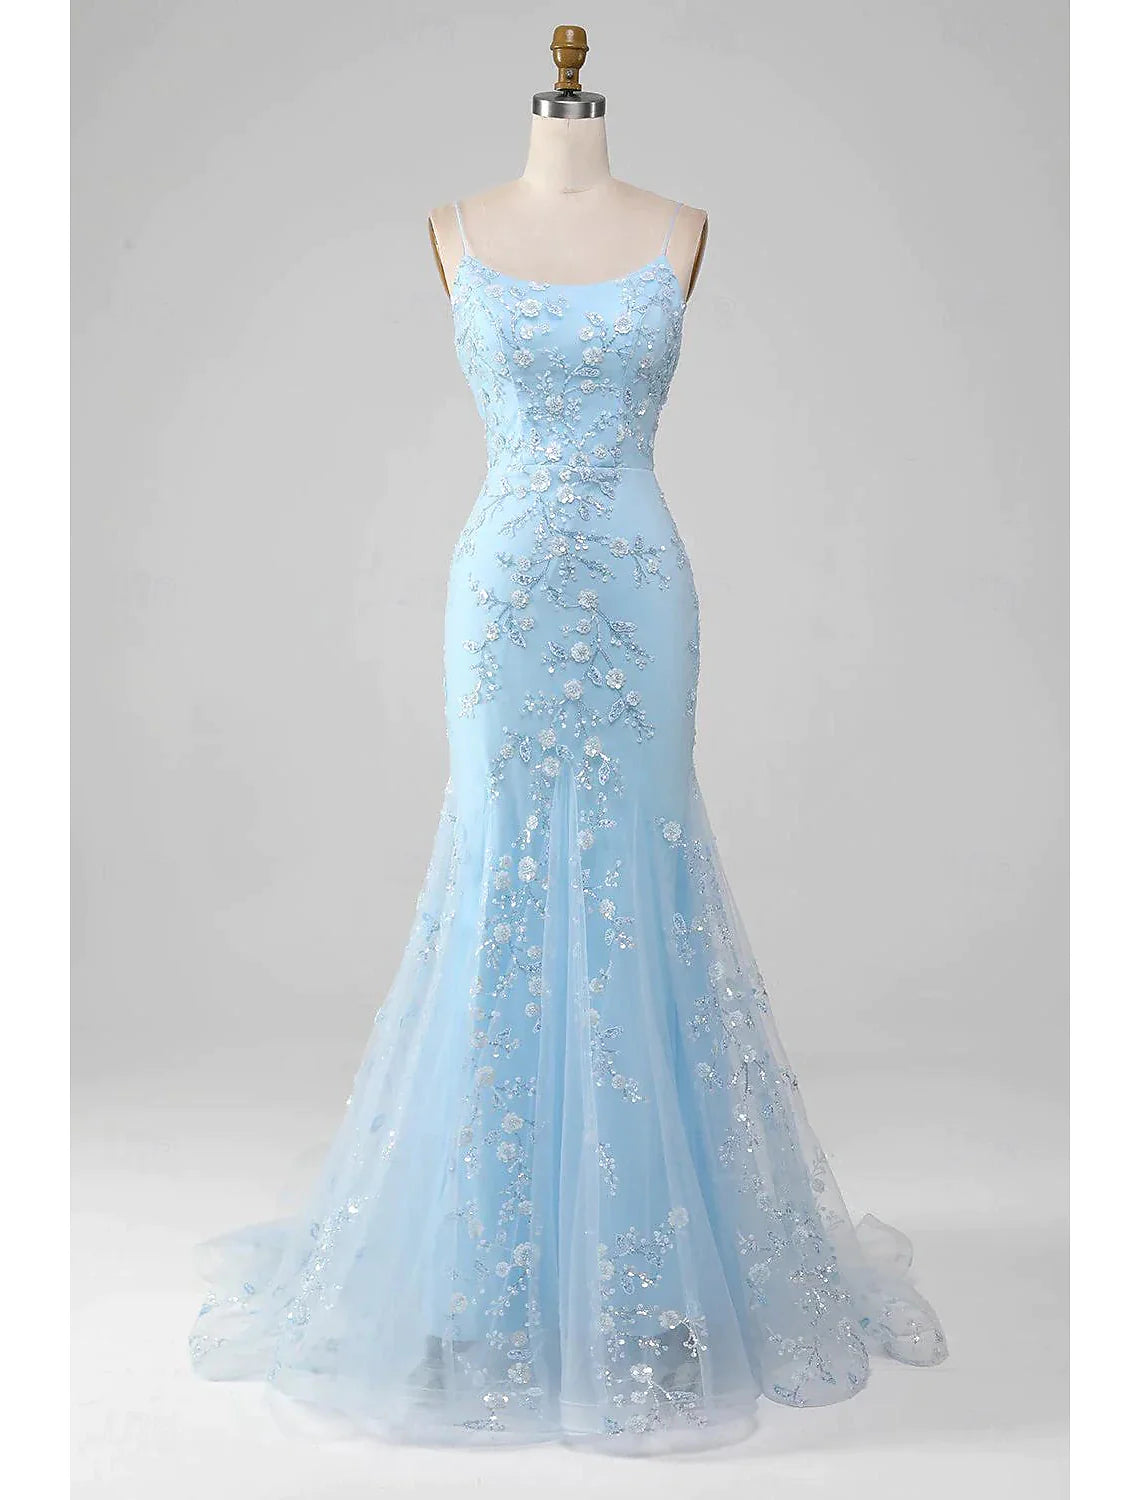 Mermaid / Trumpet Prom Dresses Elegant Dress Formal Floor Length Sleeveless Spaghetti Strap Tulle with Sequin Appliques